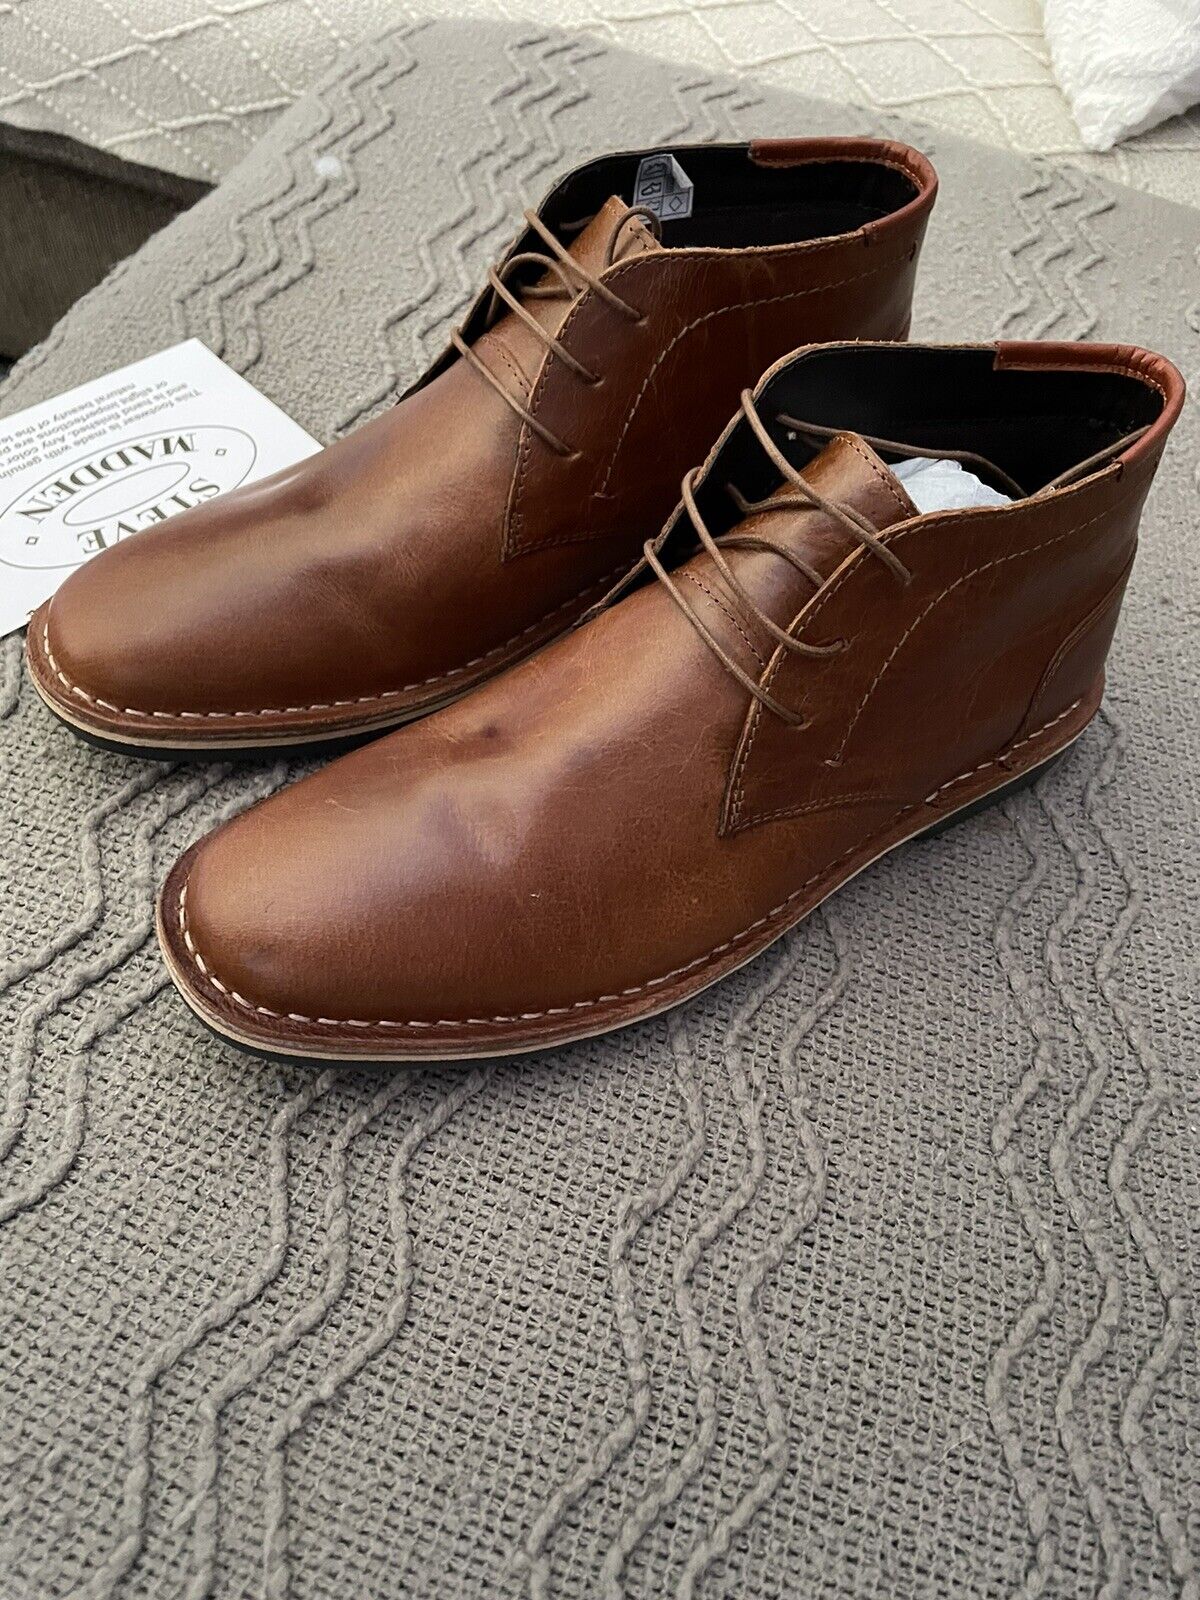 Steve Madden Mens Harken Chukka Genuine Leather Boots/Dress Shoes/ Size ...